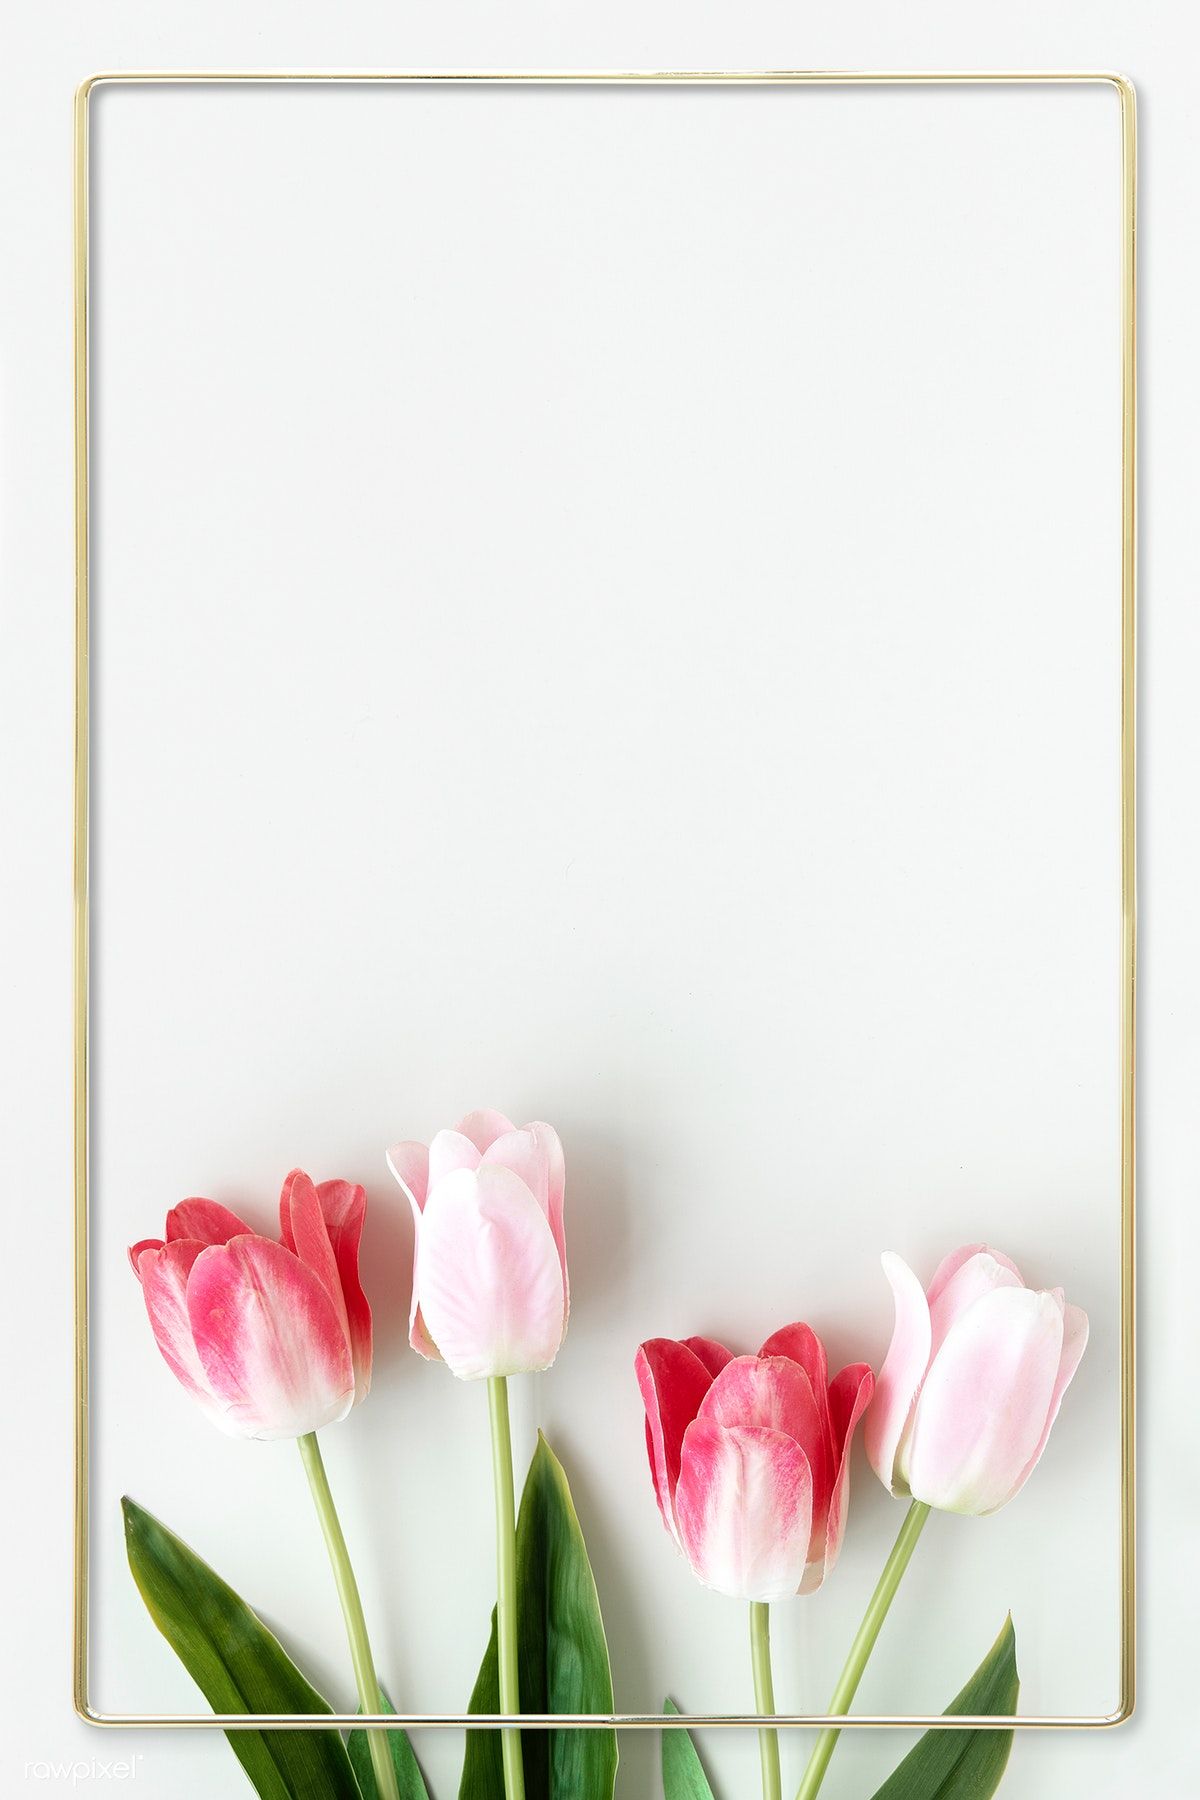 Premium Psd Of Golden Blooming Tulip Frame Design